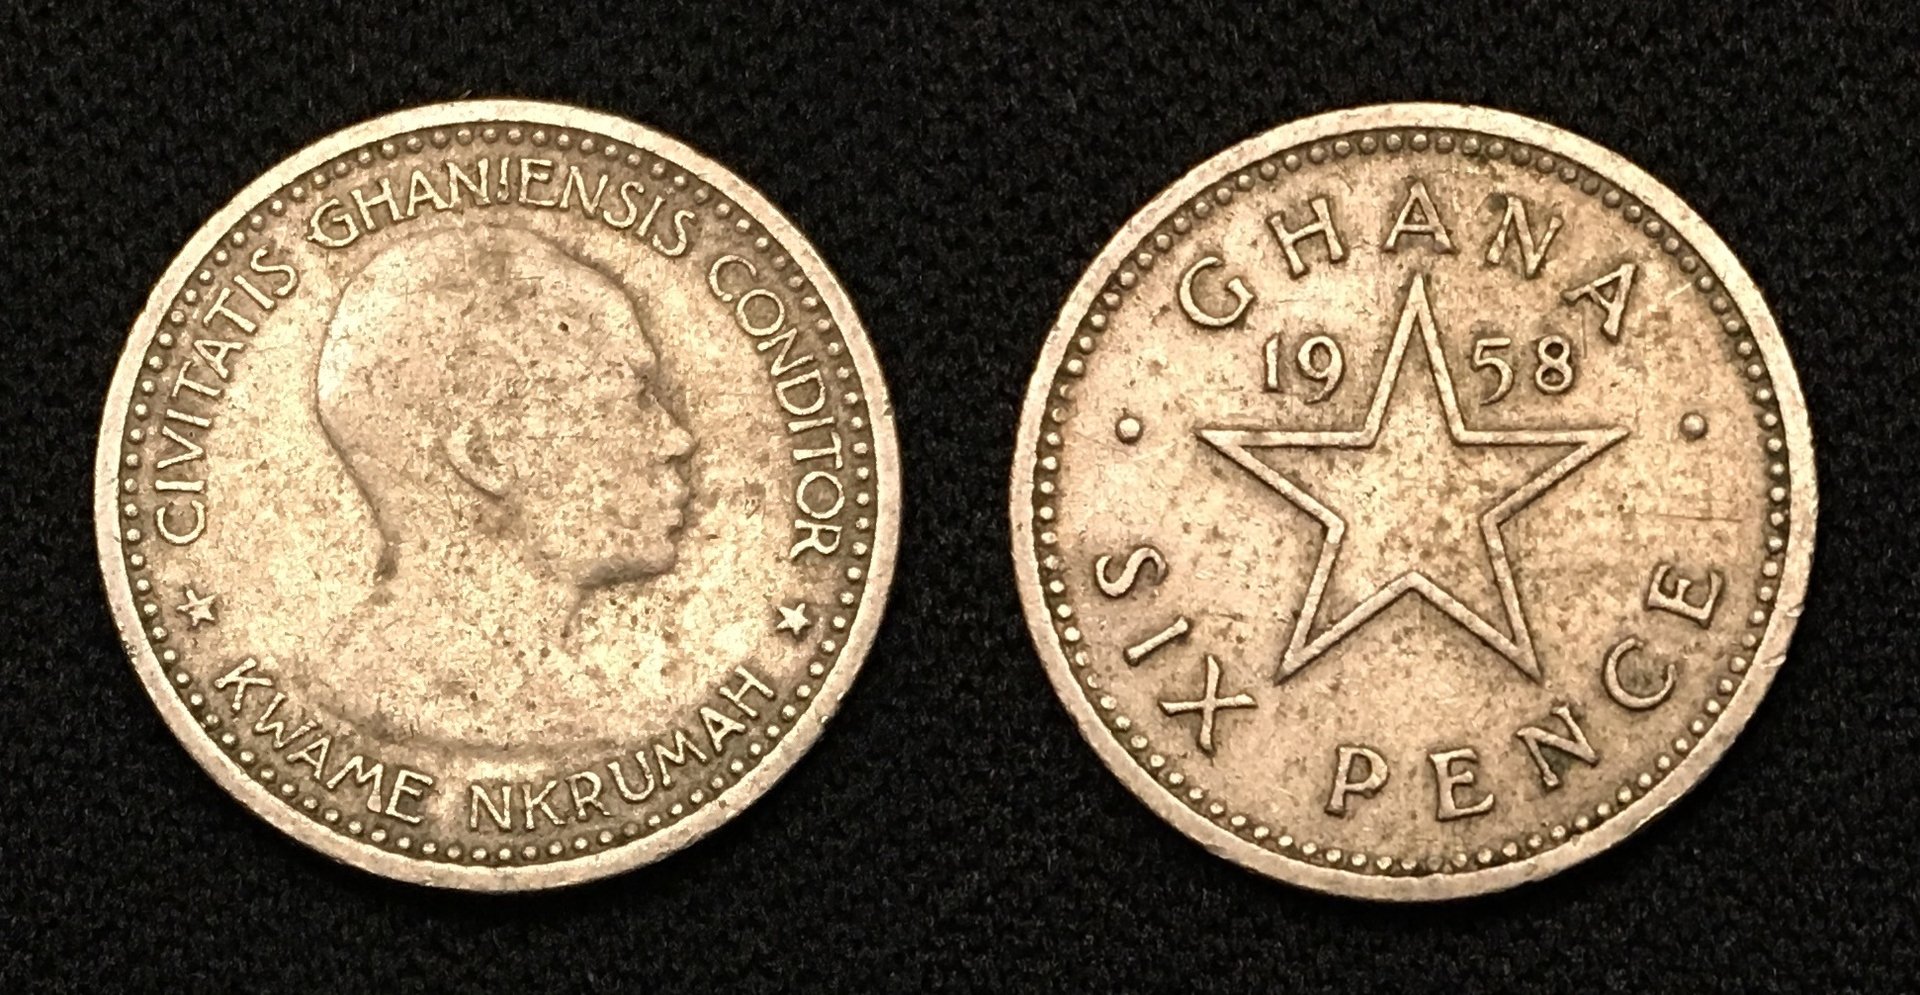 1958 CE 6 Pence Combined.jpg